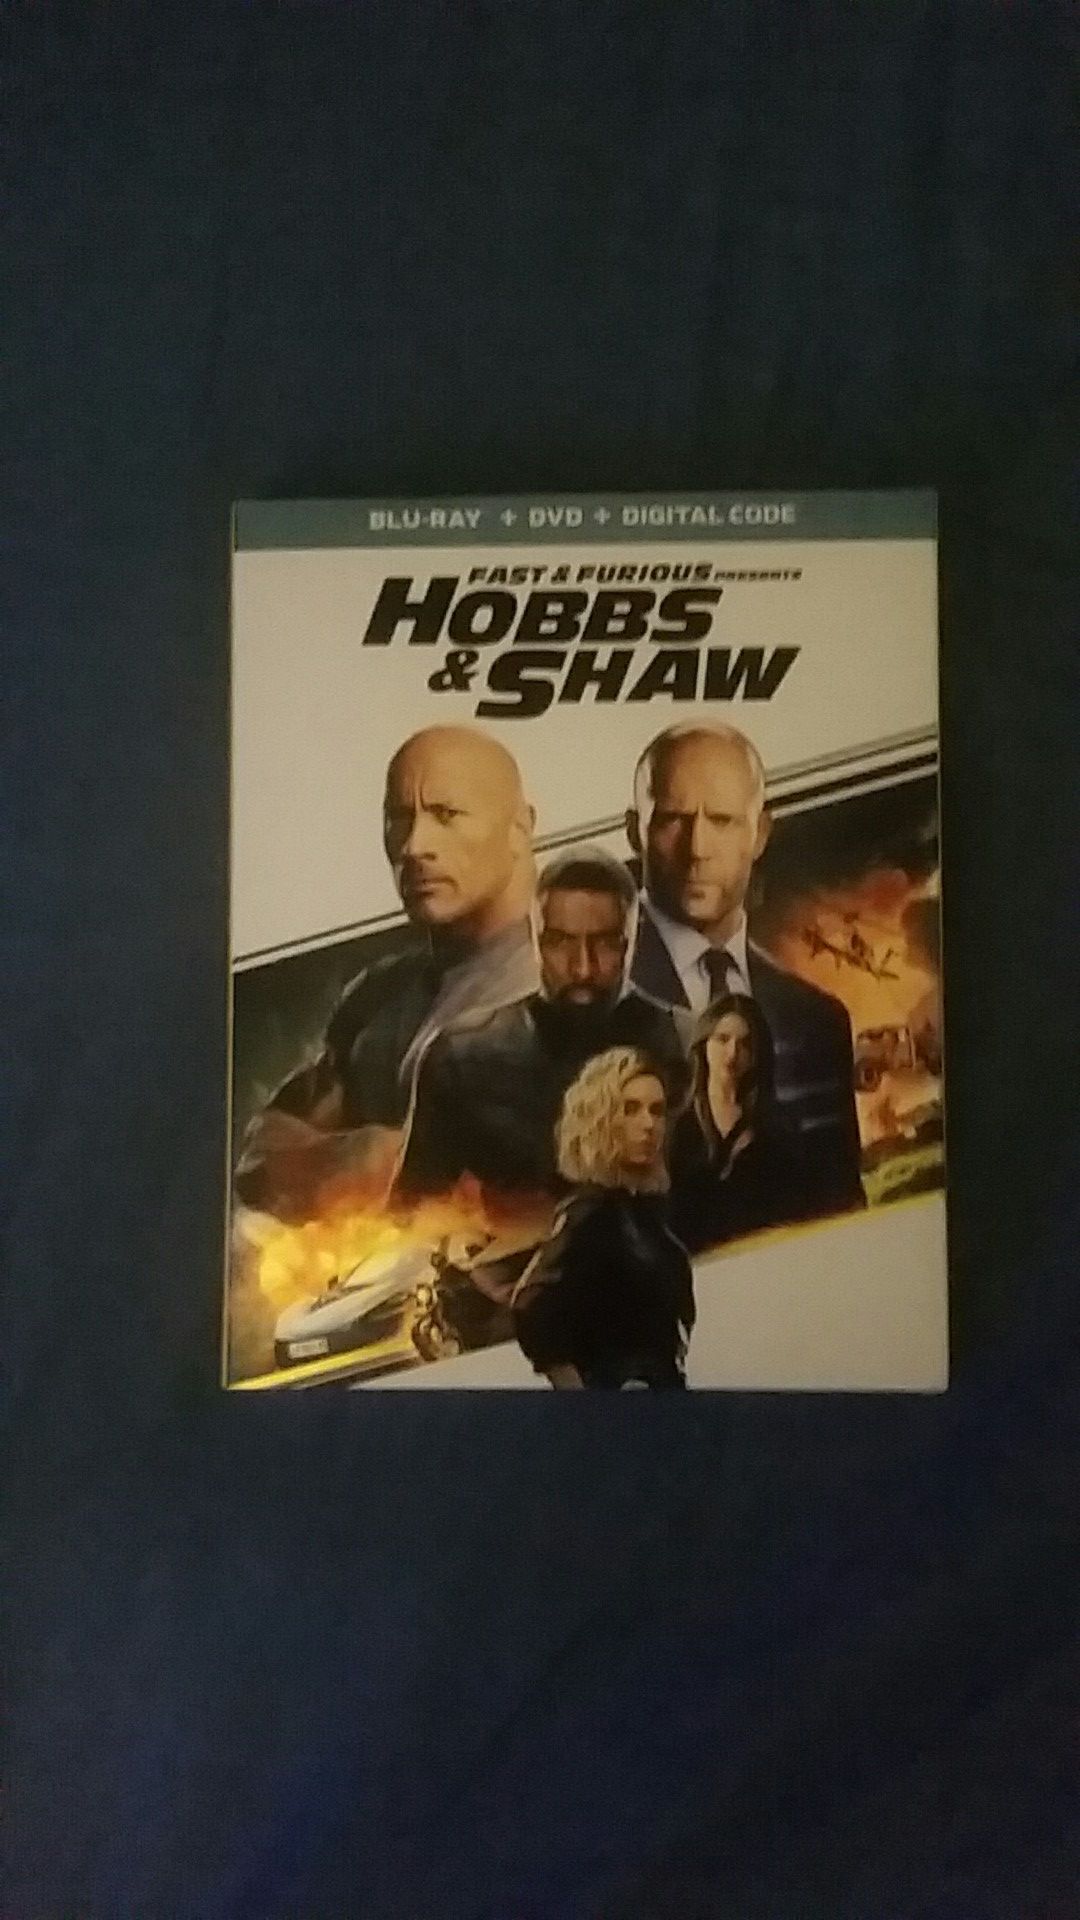 Hobbs & Shaw Blu-ray + DVD + Digital Code